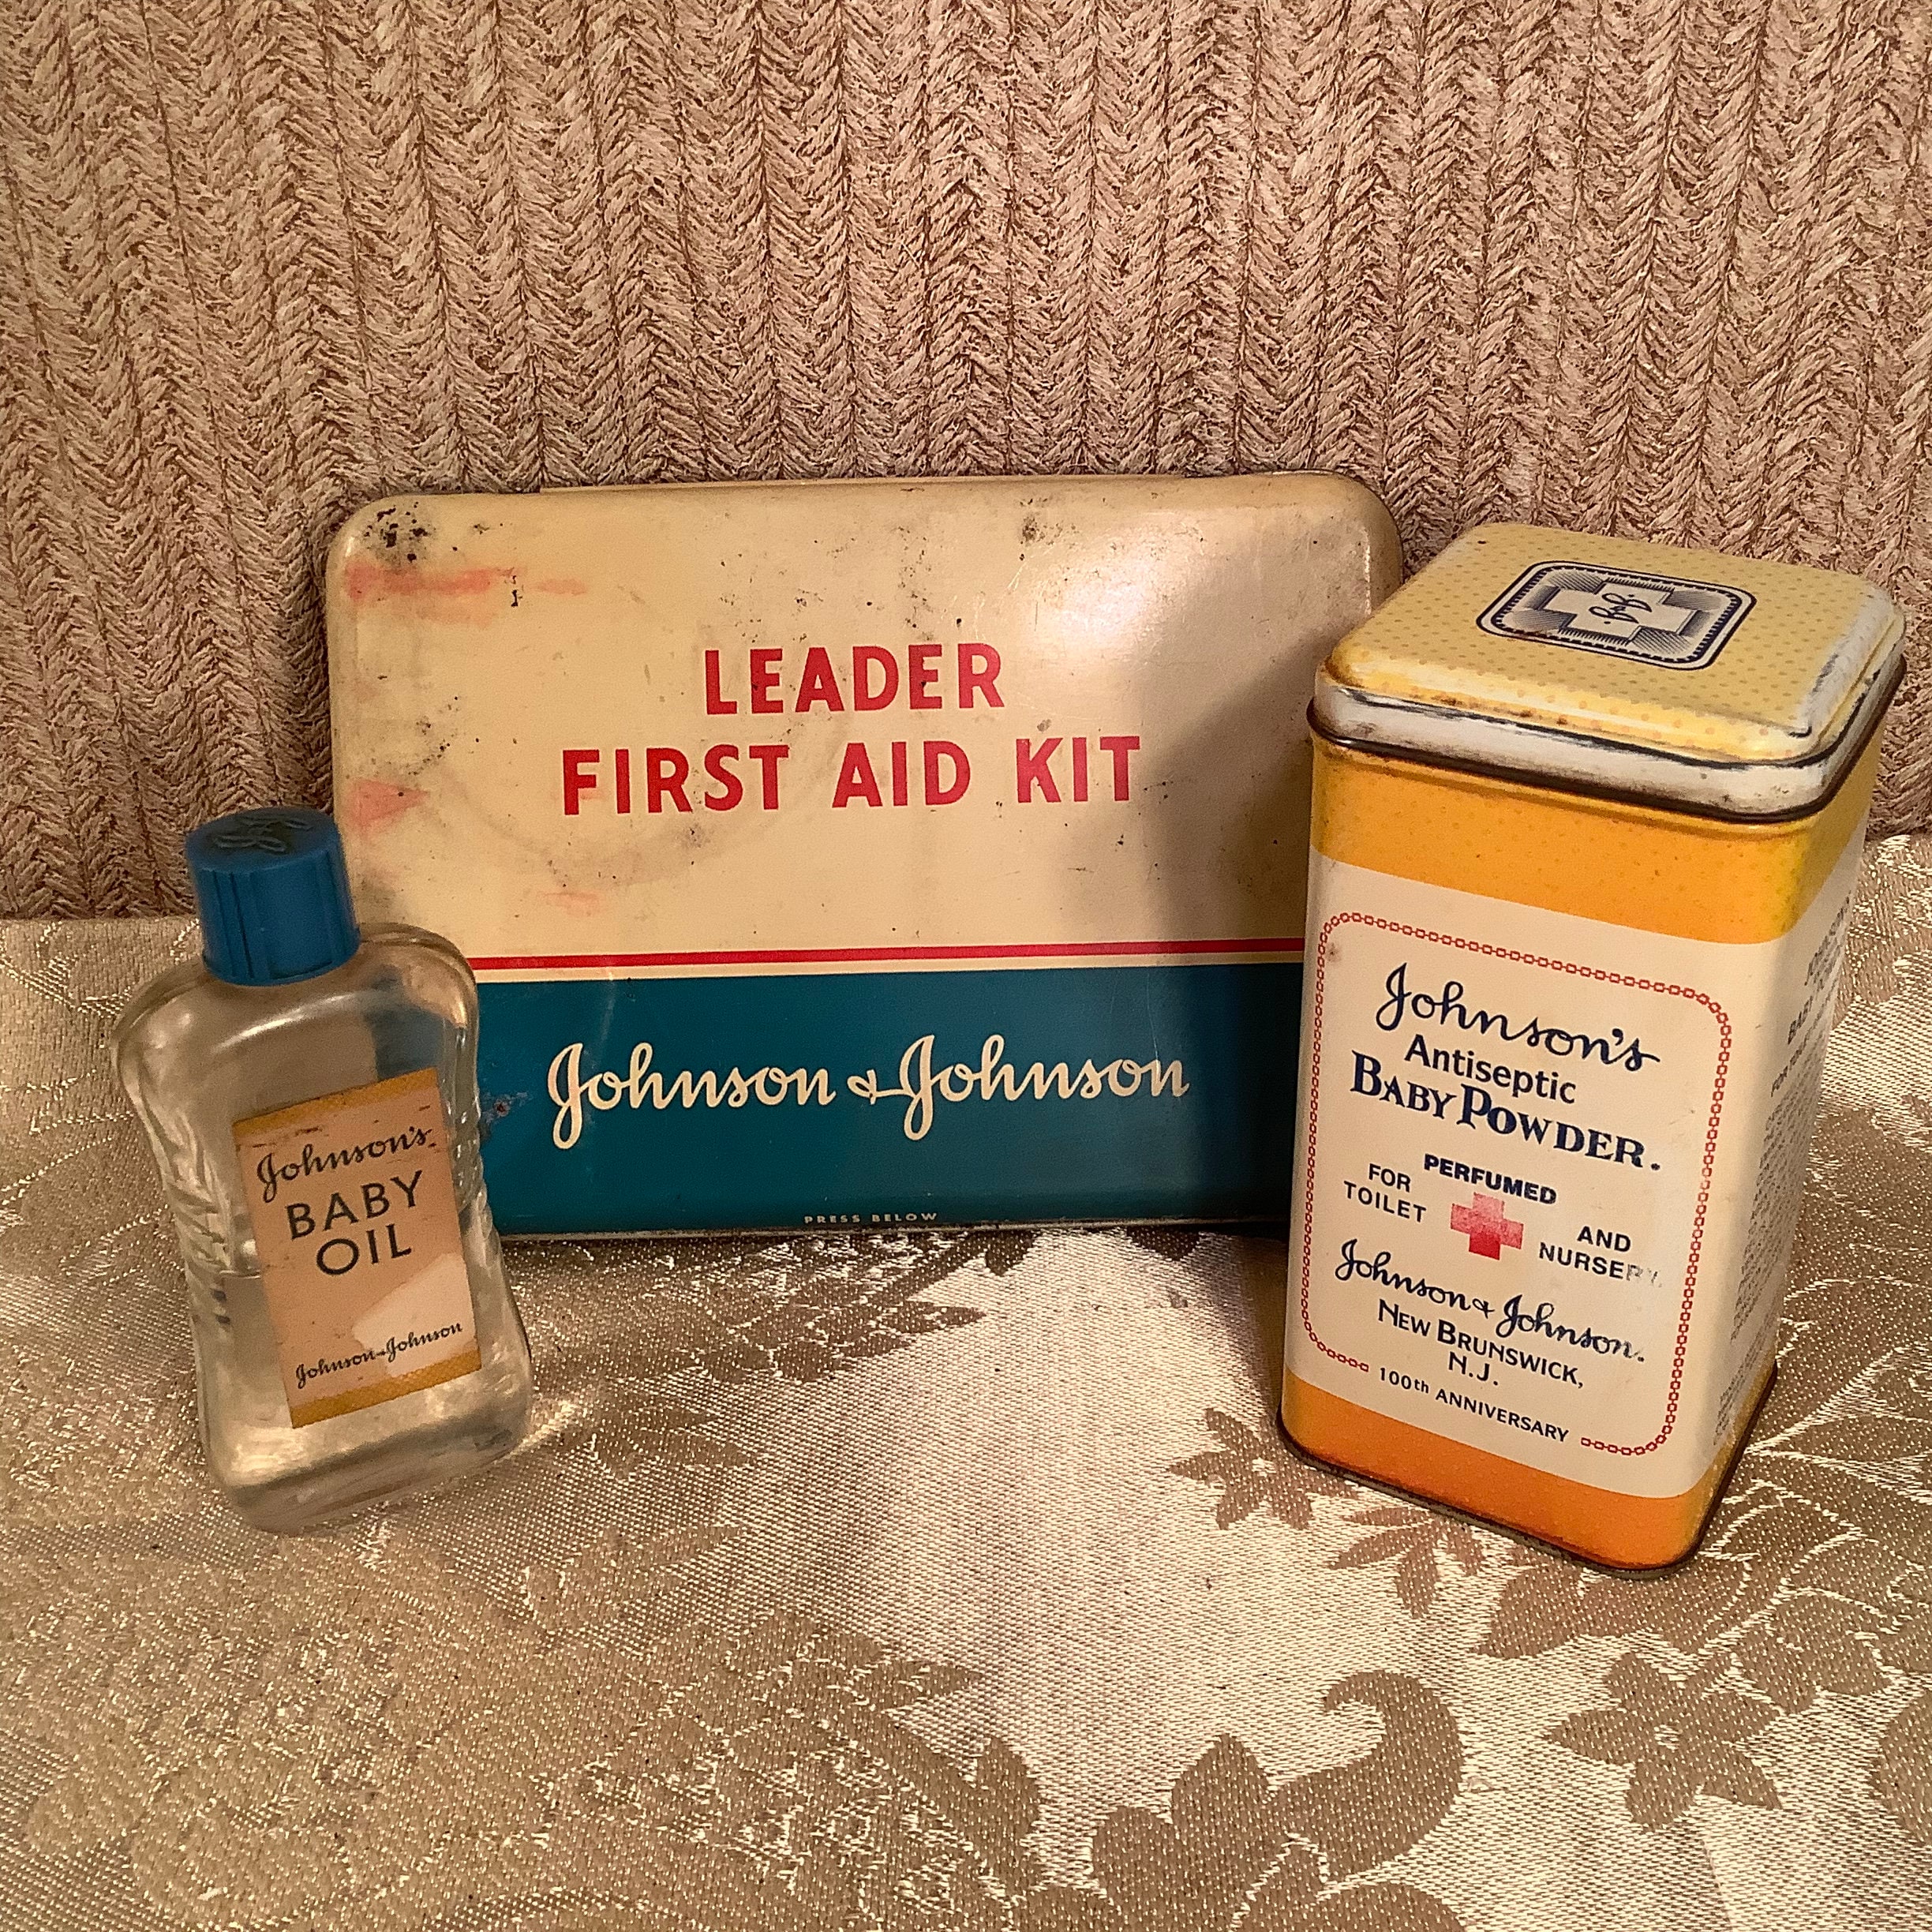 J&J Baby Powder Type II Fragrance Oil – Lebermuth